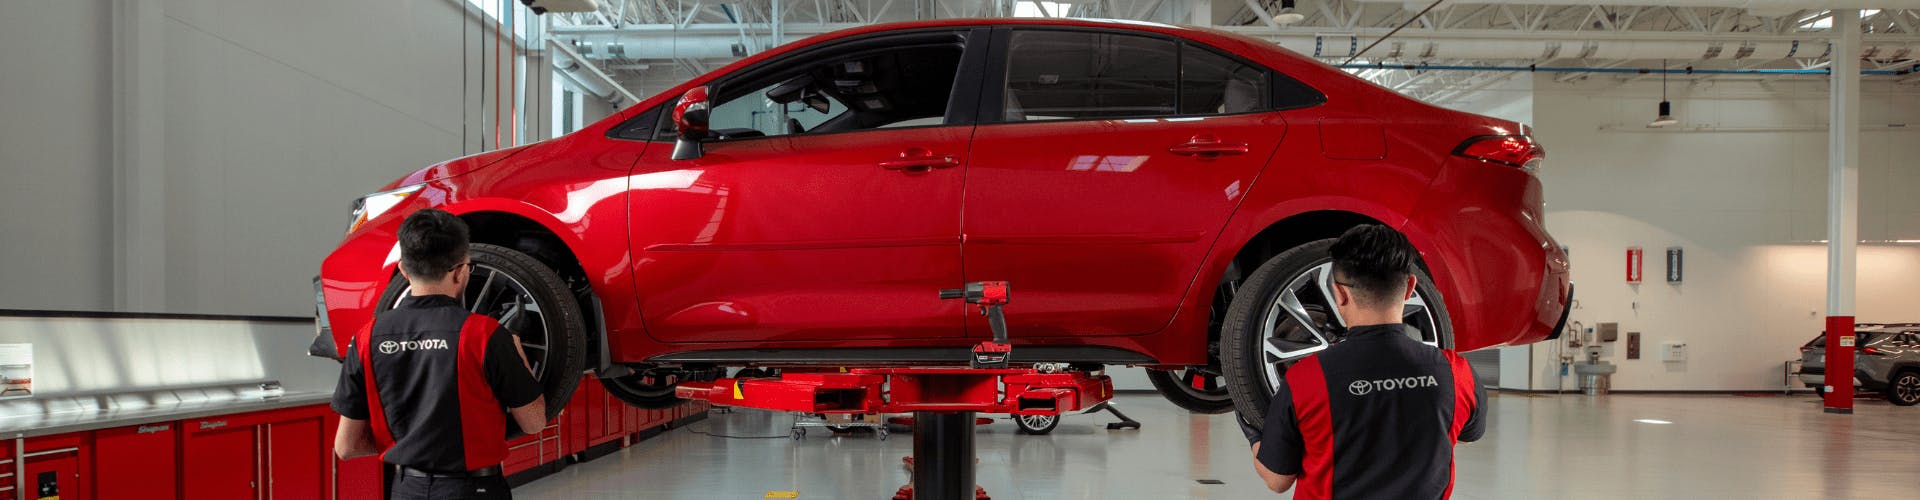 Toyota service technicians replacing tires on red sedan